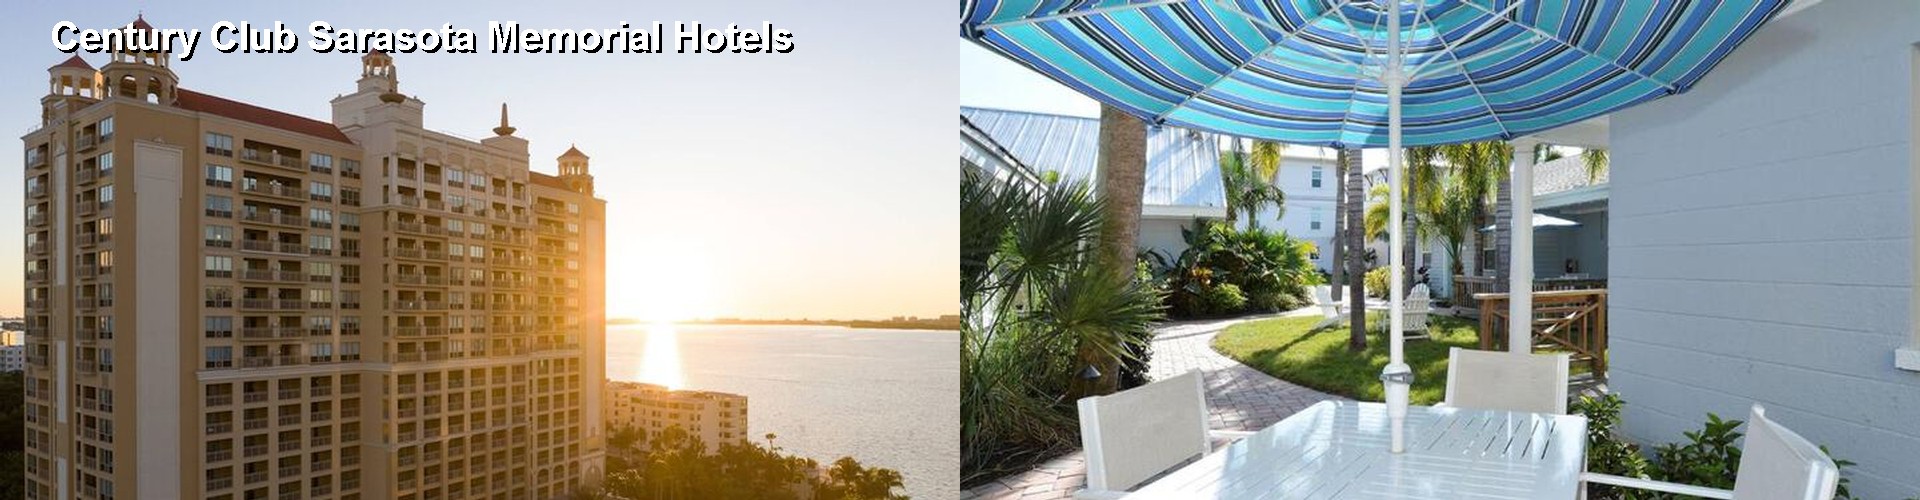 5 Best Hotels near Century Club Sarasota Memorial